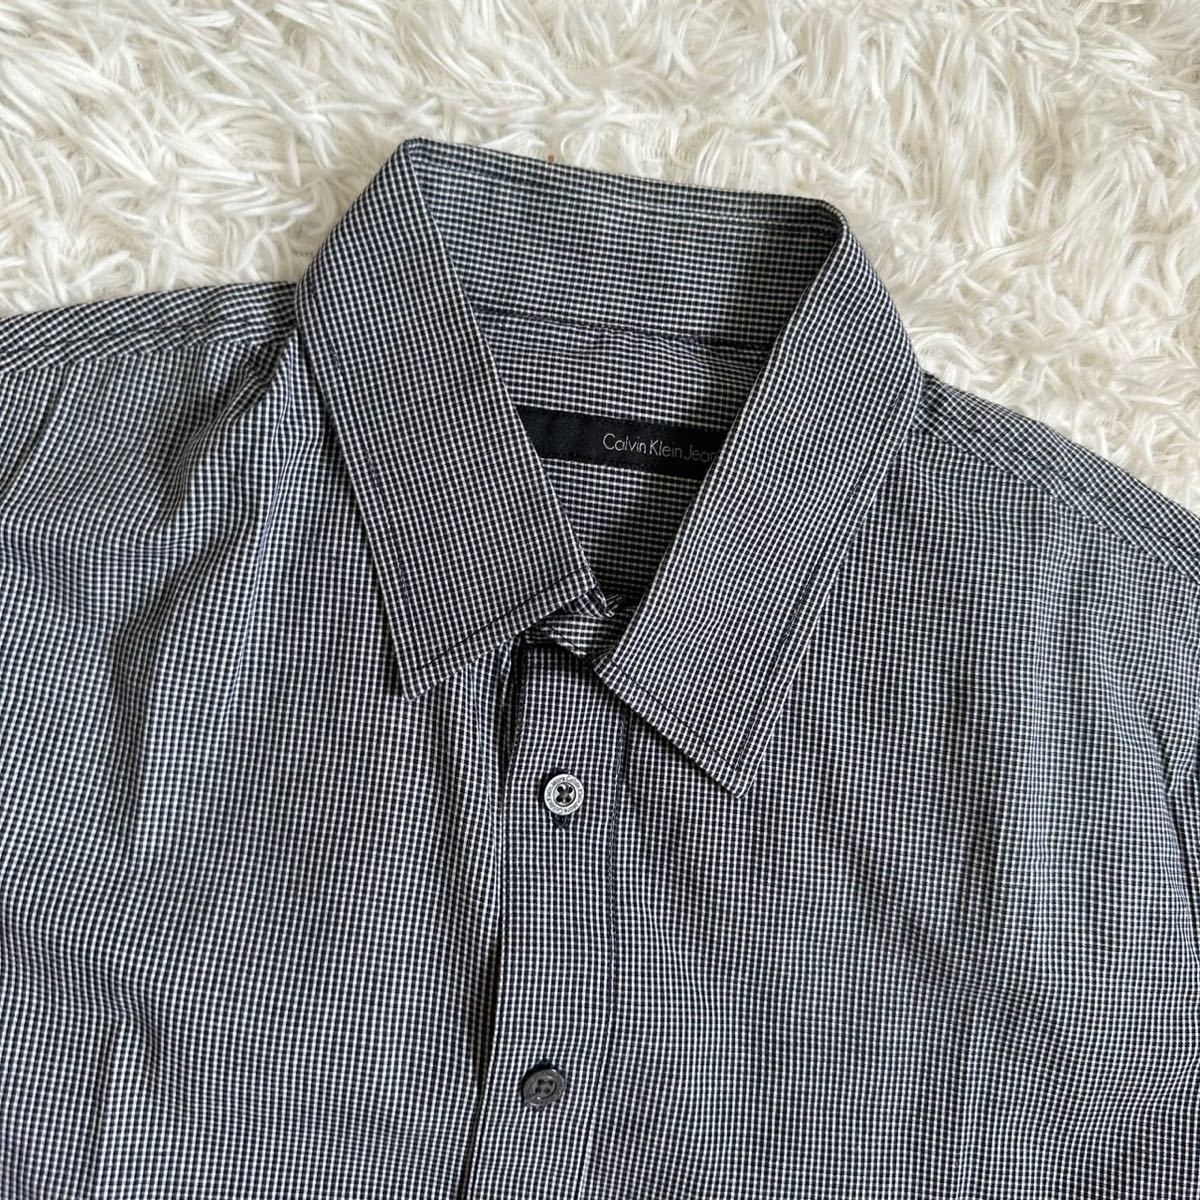  long sleeve shirt Calvin Klein S